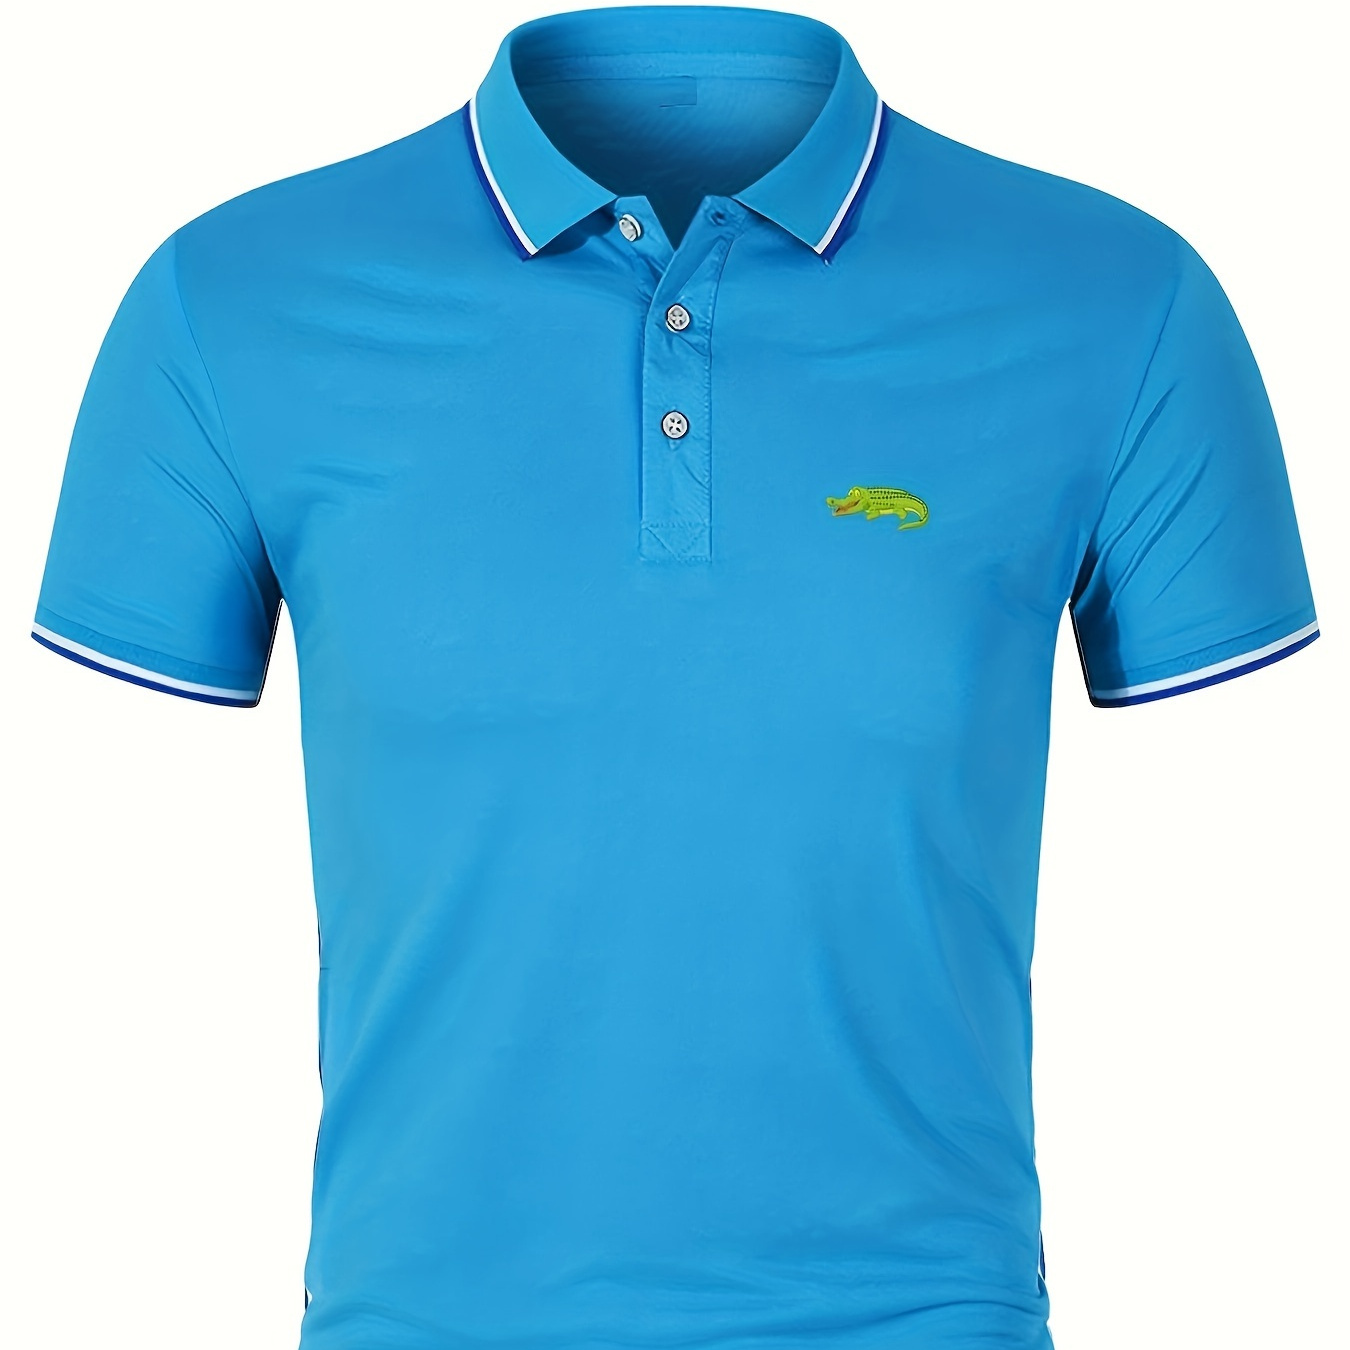 

Men's Golf Shirt, Crocodile Print Short Sleeve Breathable Tennis Shirt, Business Casual, Moisture Wicking